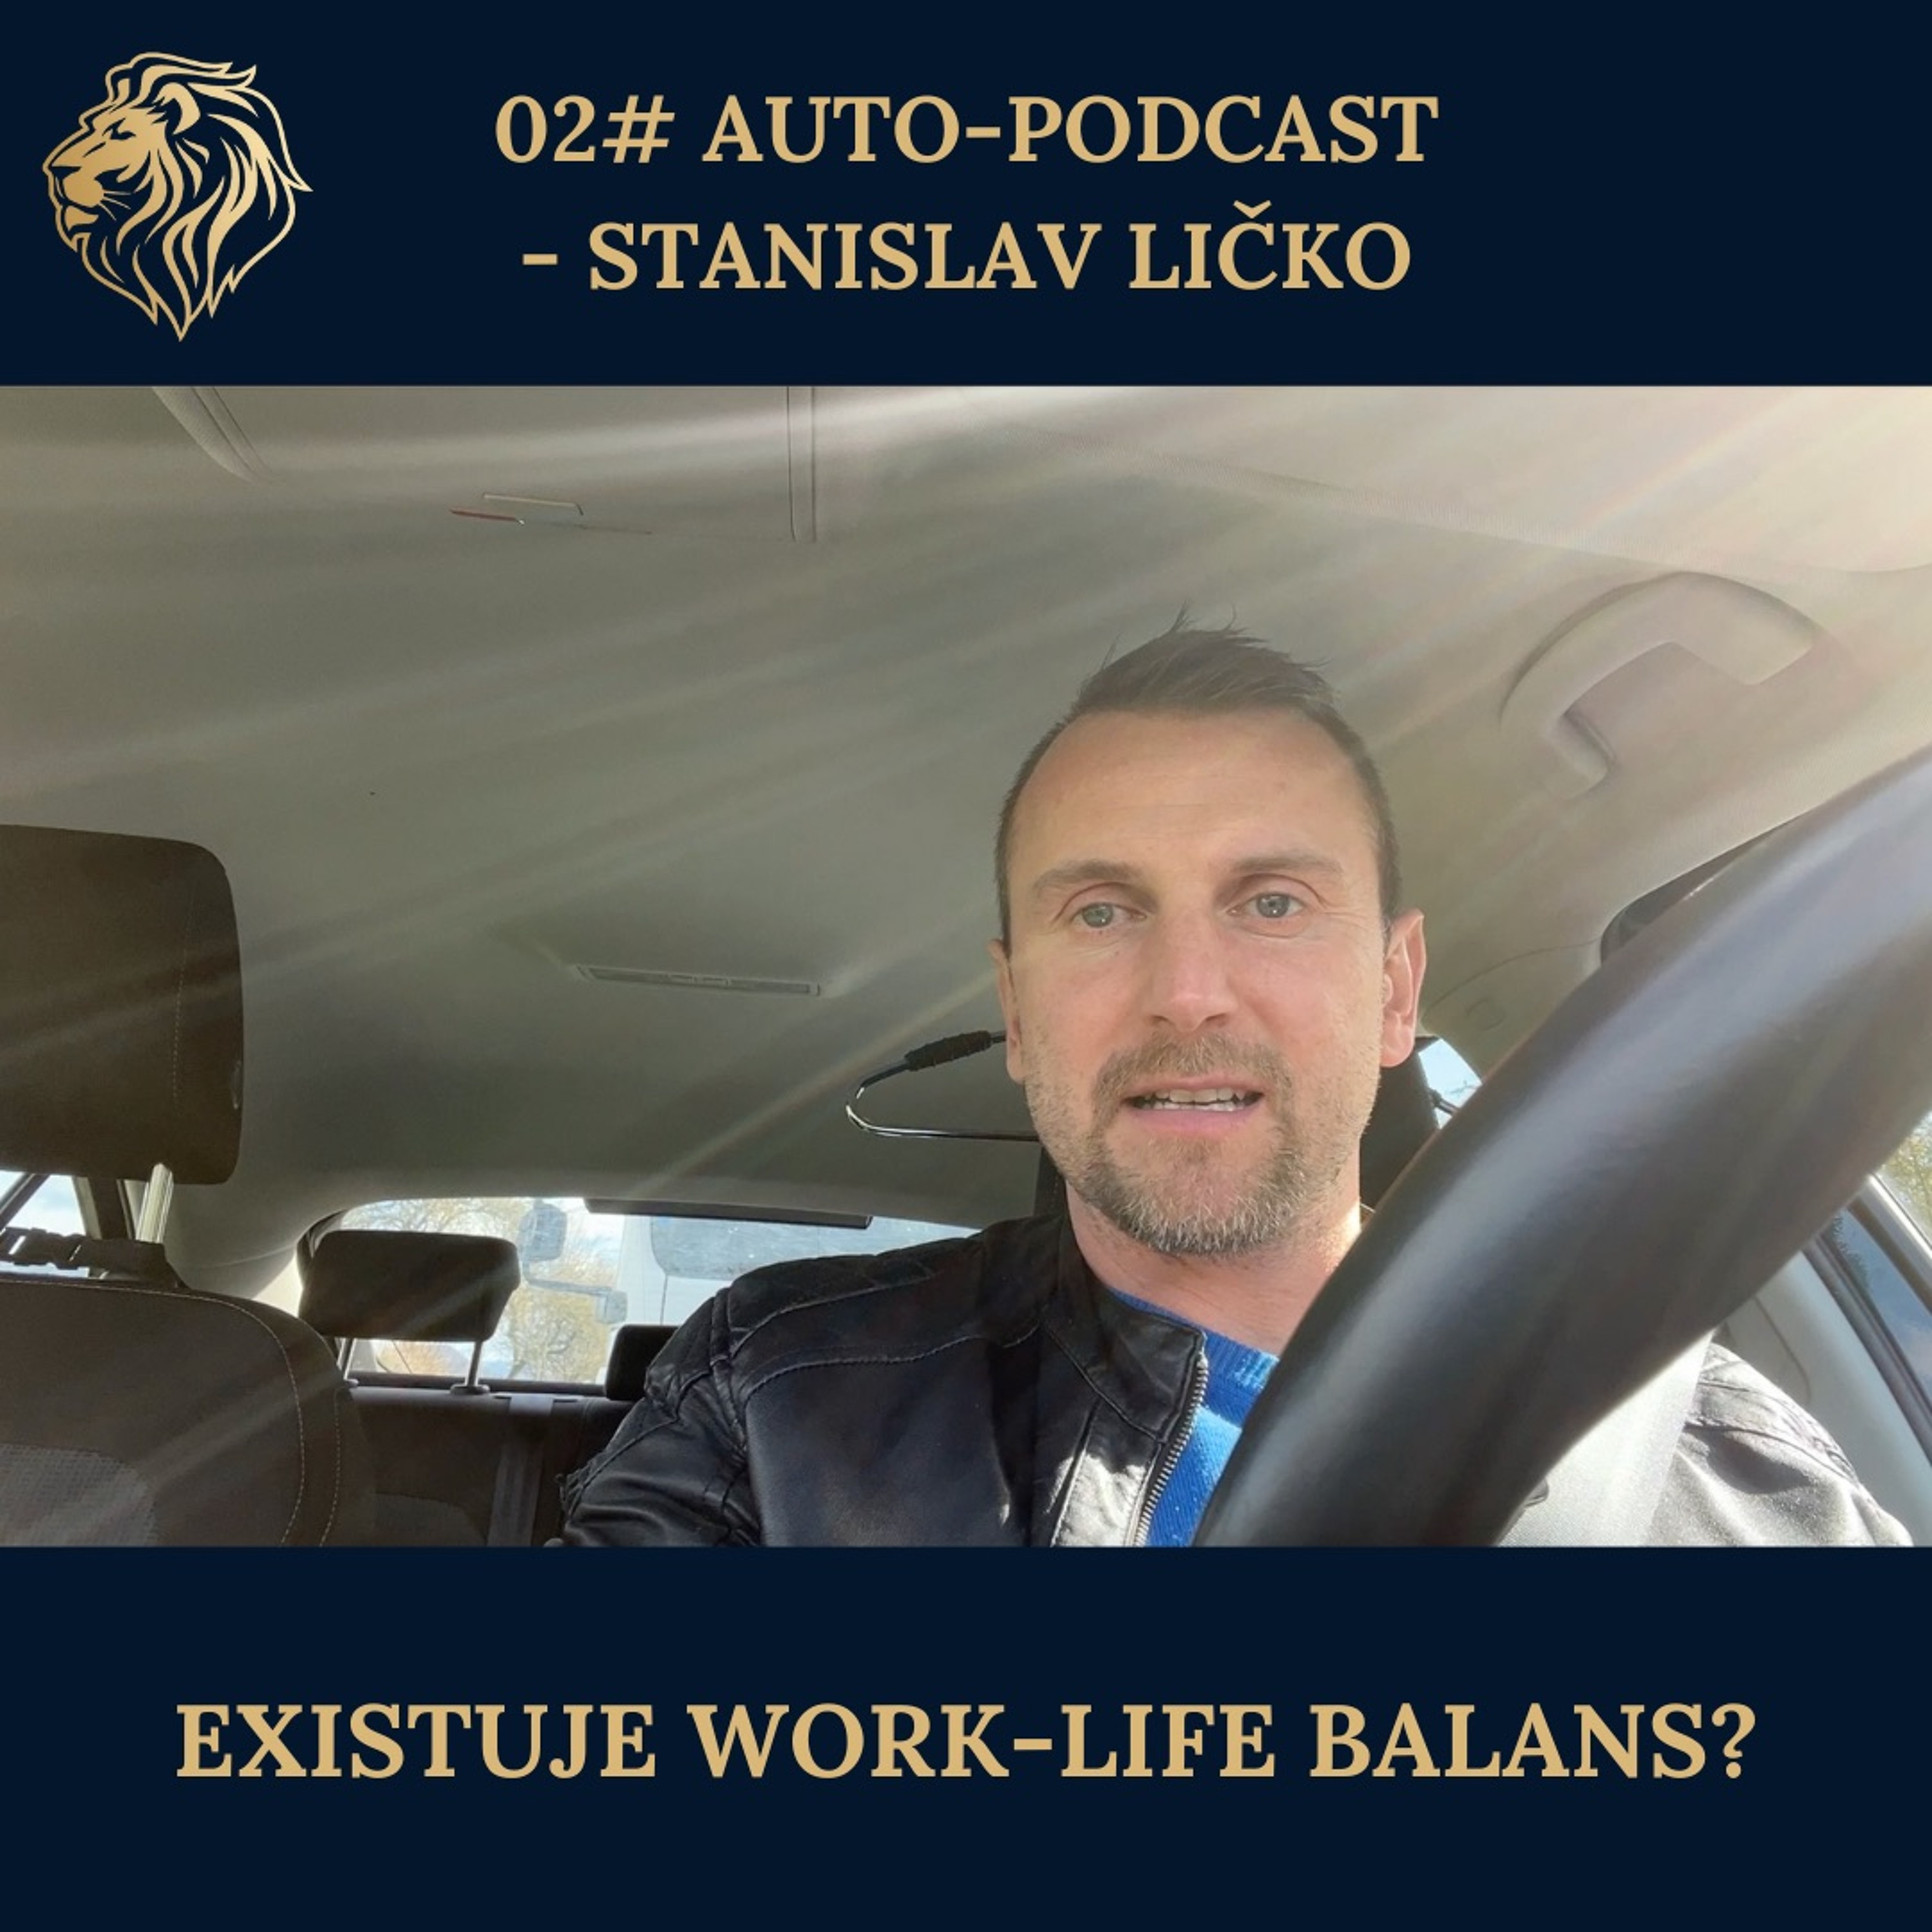 #02 AUTO-PODCAST: Existuje work-life balans?